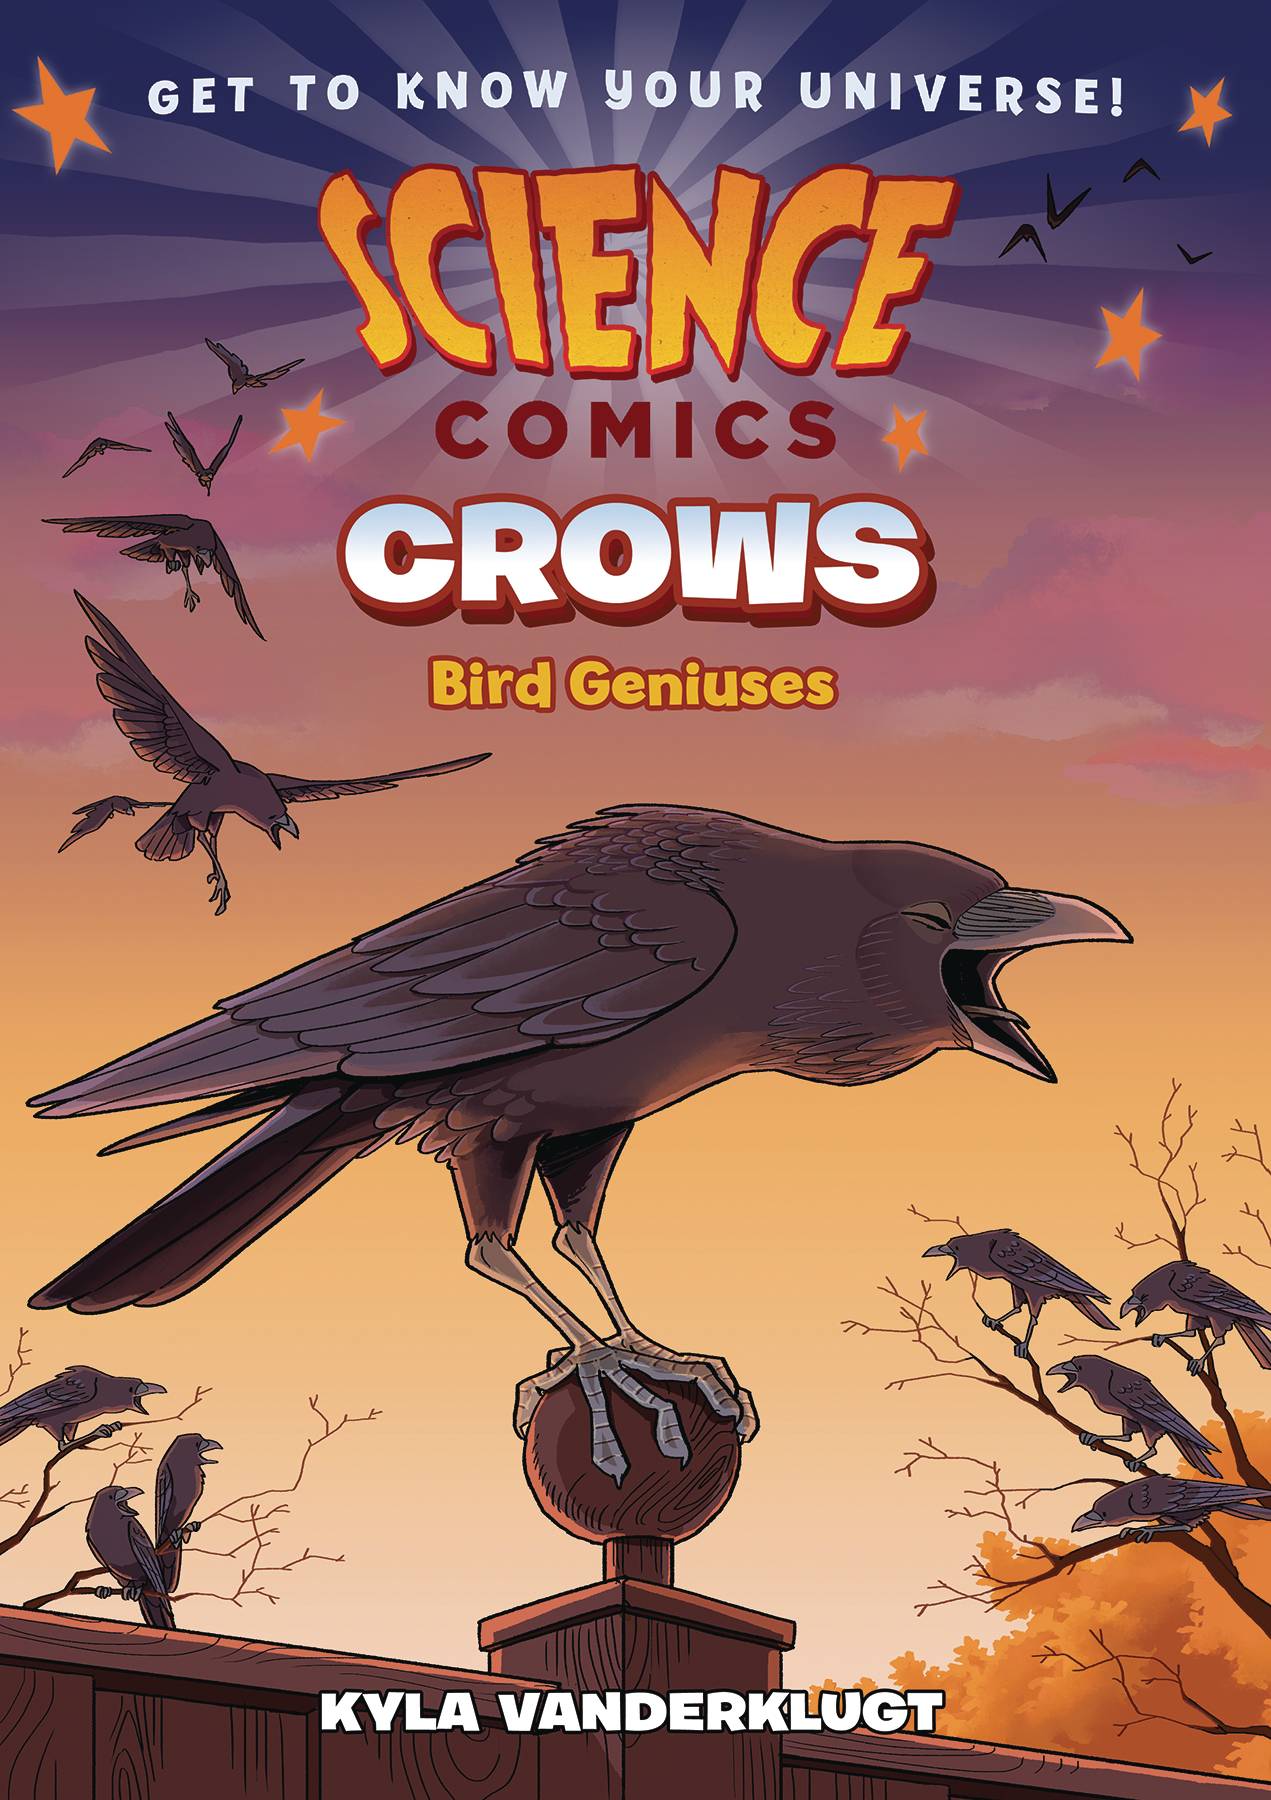 Science Comics Crows! Bird Geniuses